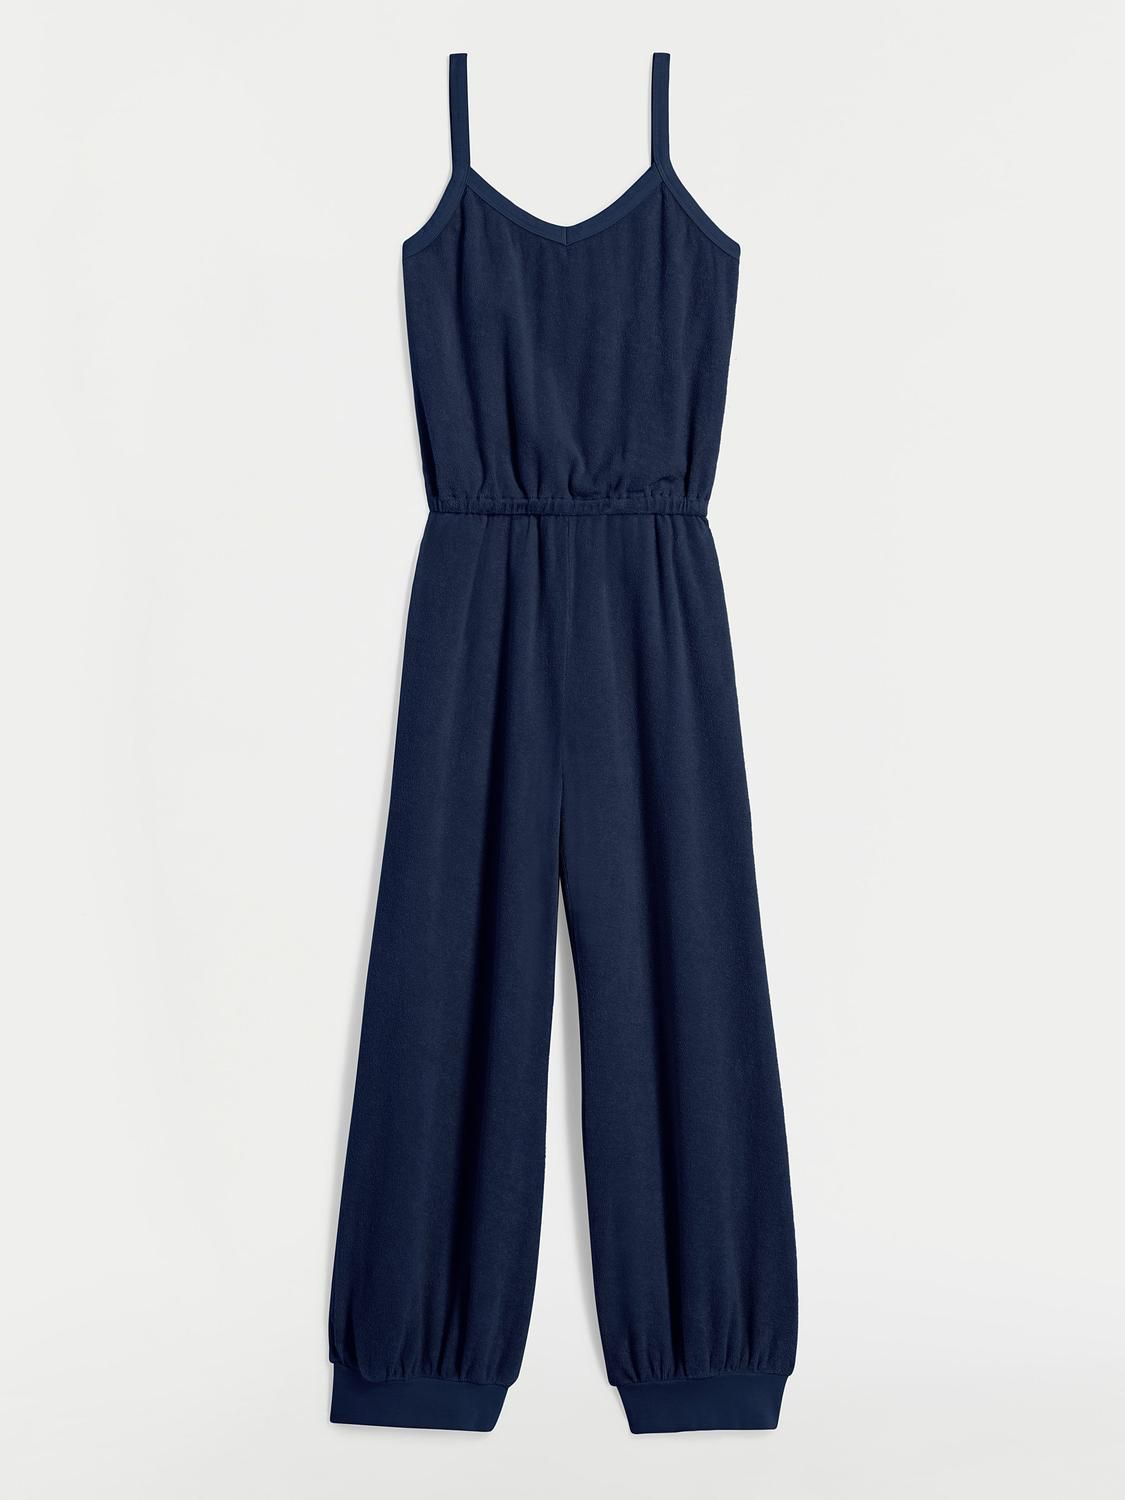 Style 1-935038683-3471 Suzie Kondi Size S Navy Blue Formal Jumpsuit on Queenly